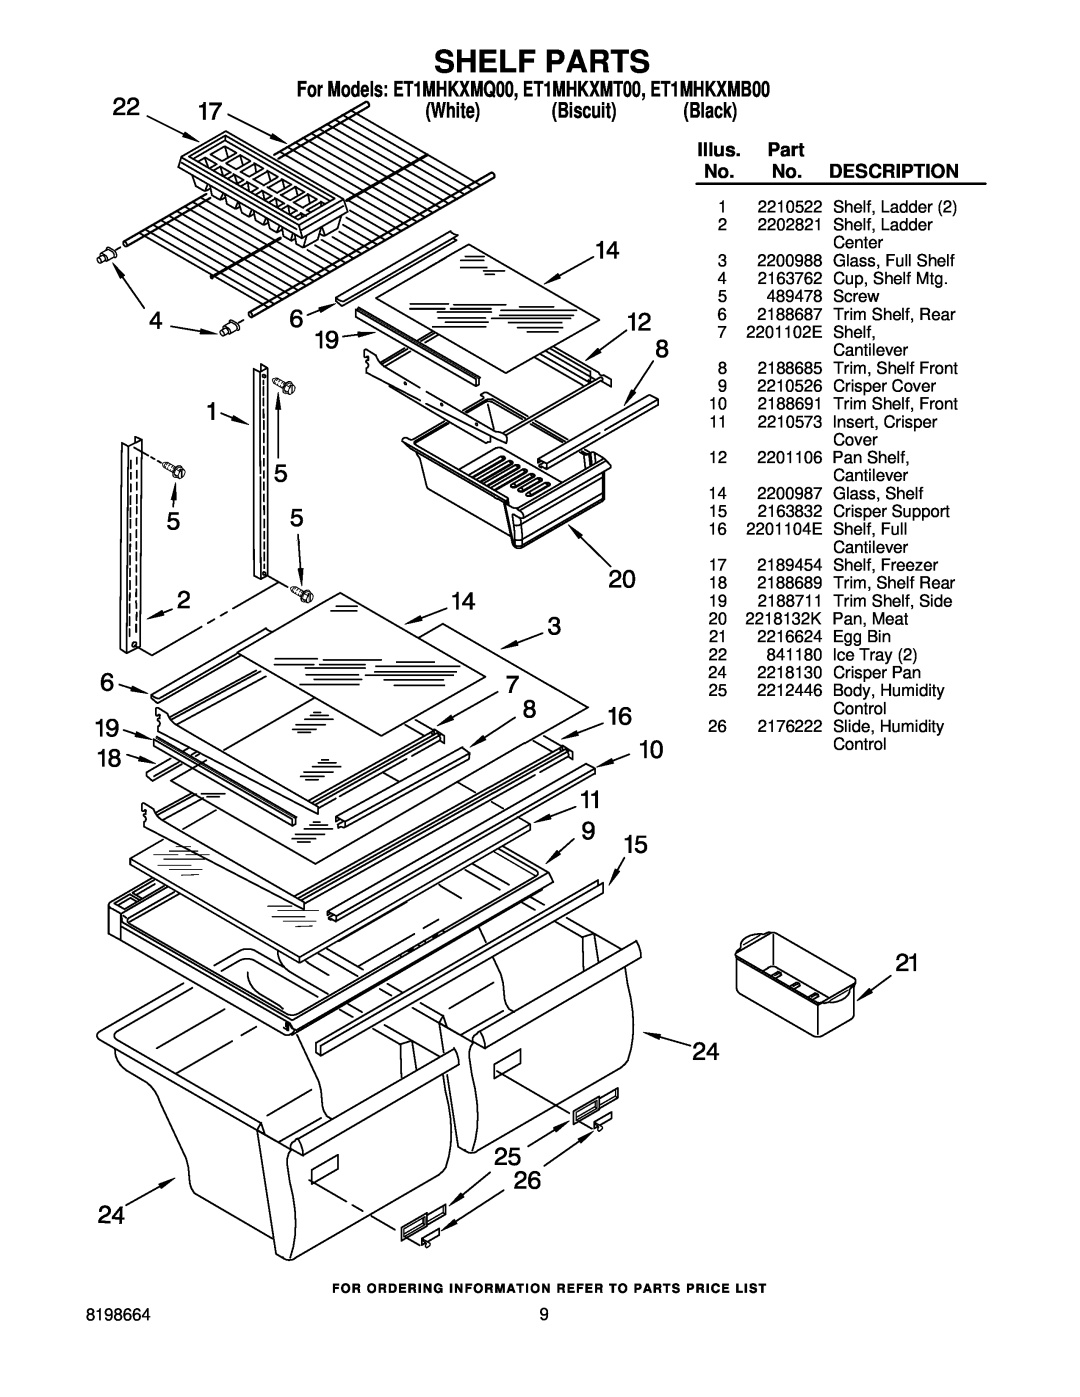 Whirlpool manual Shelf Parts, For Models ET1MHKXMQ00, ET1MHKXMT00, ET1MHKXMB00 White Biscuit Black, Illus, Description 